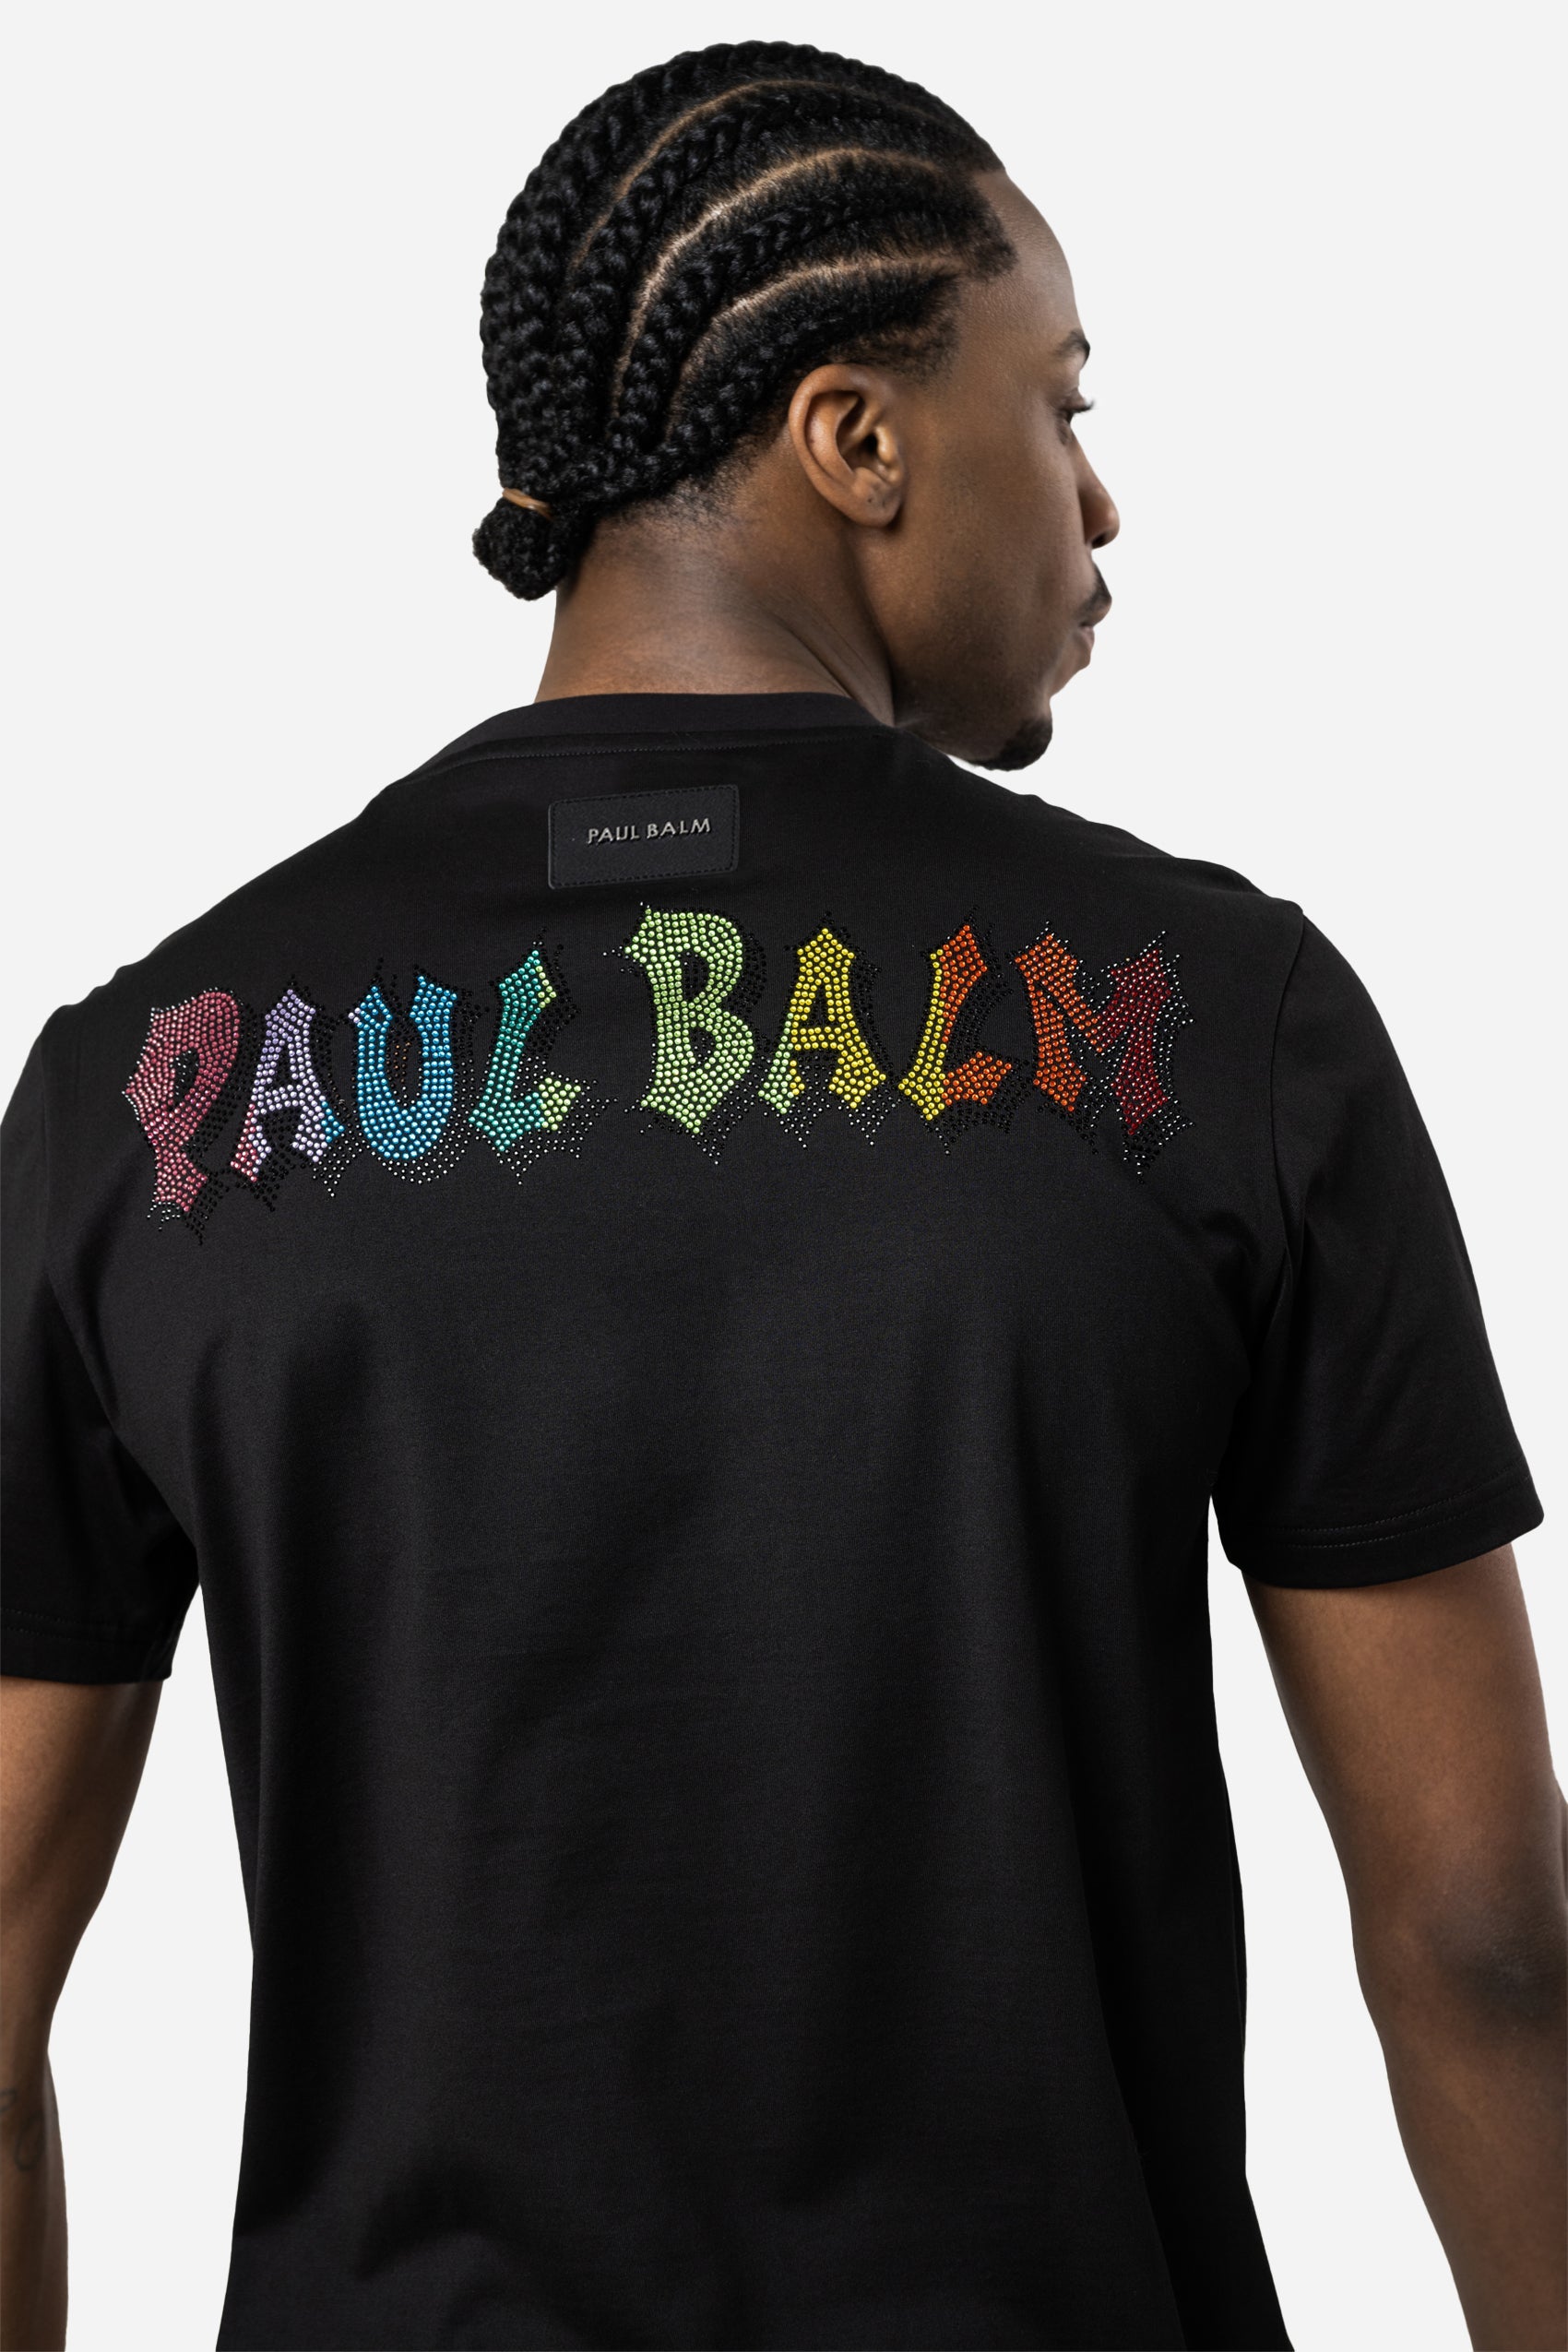 Crystal Rainbow Teddy T-Shirt - Limited to 300 - PAUL BALM WORLD